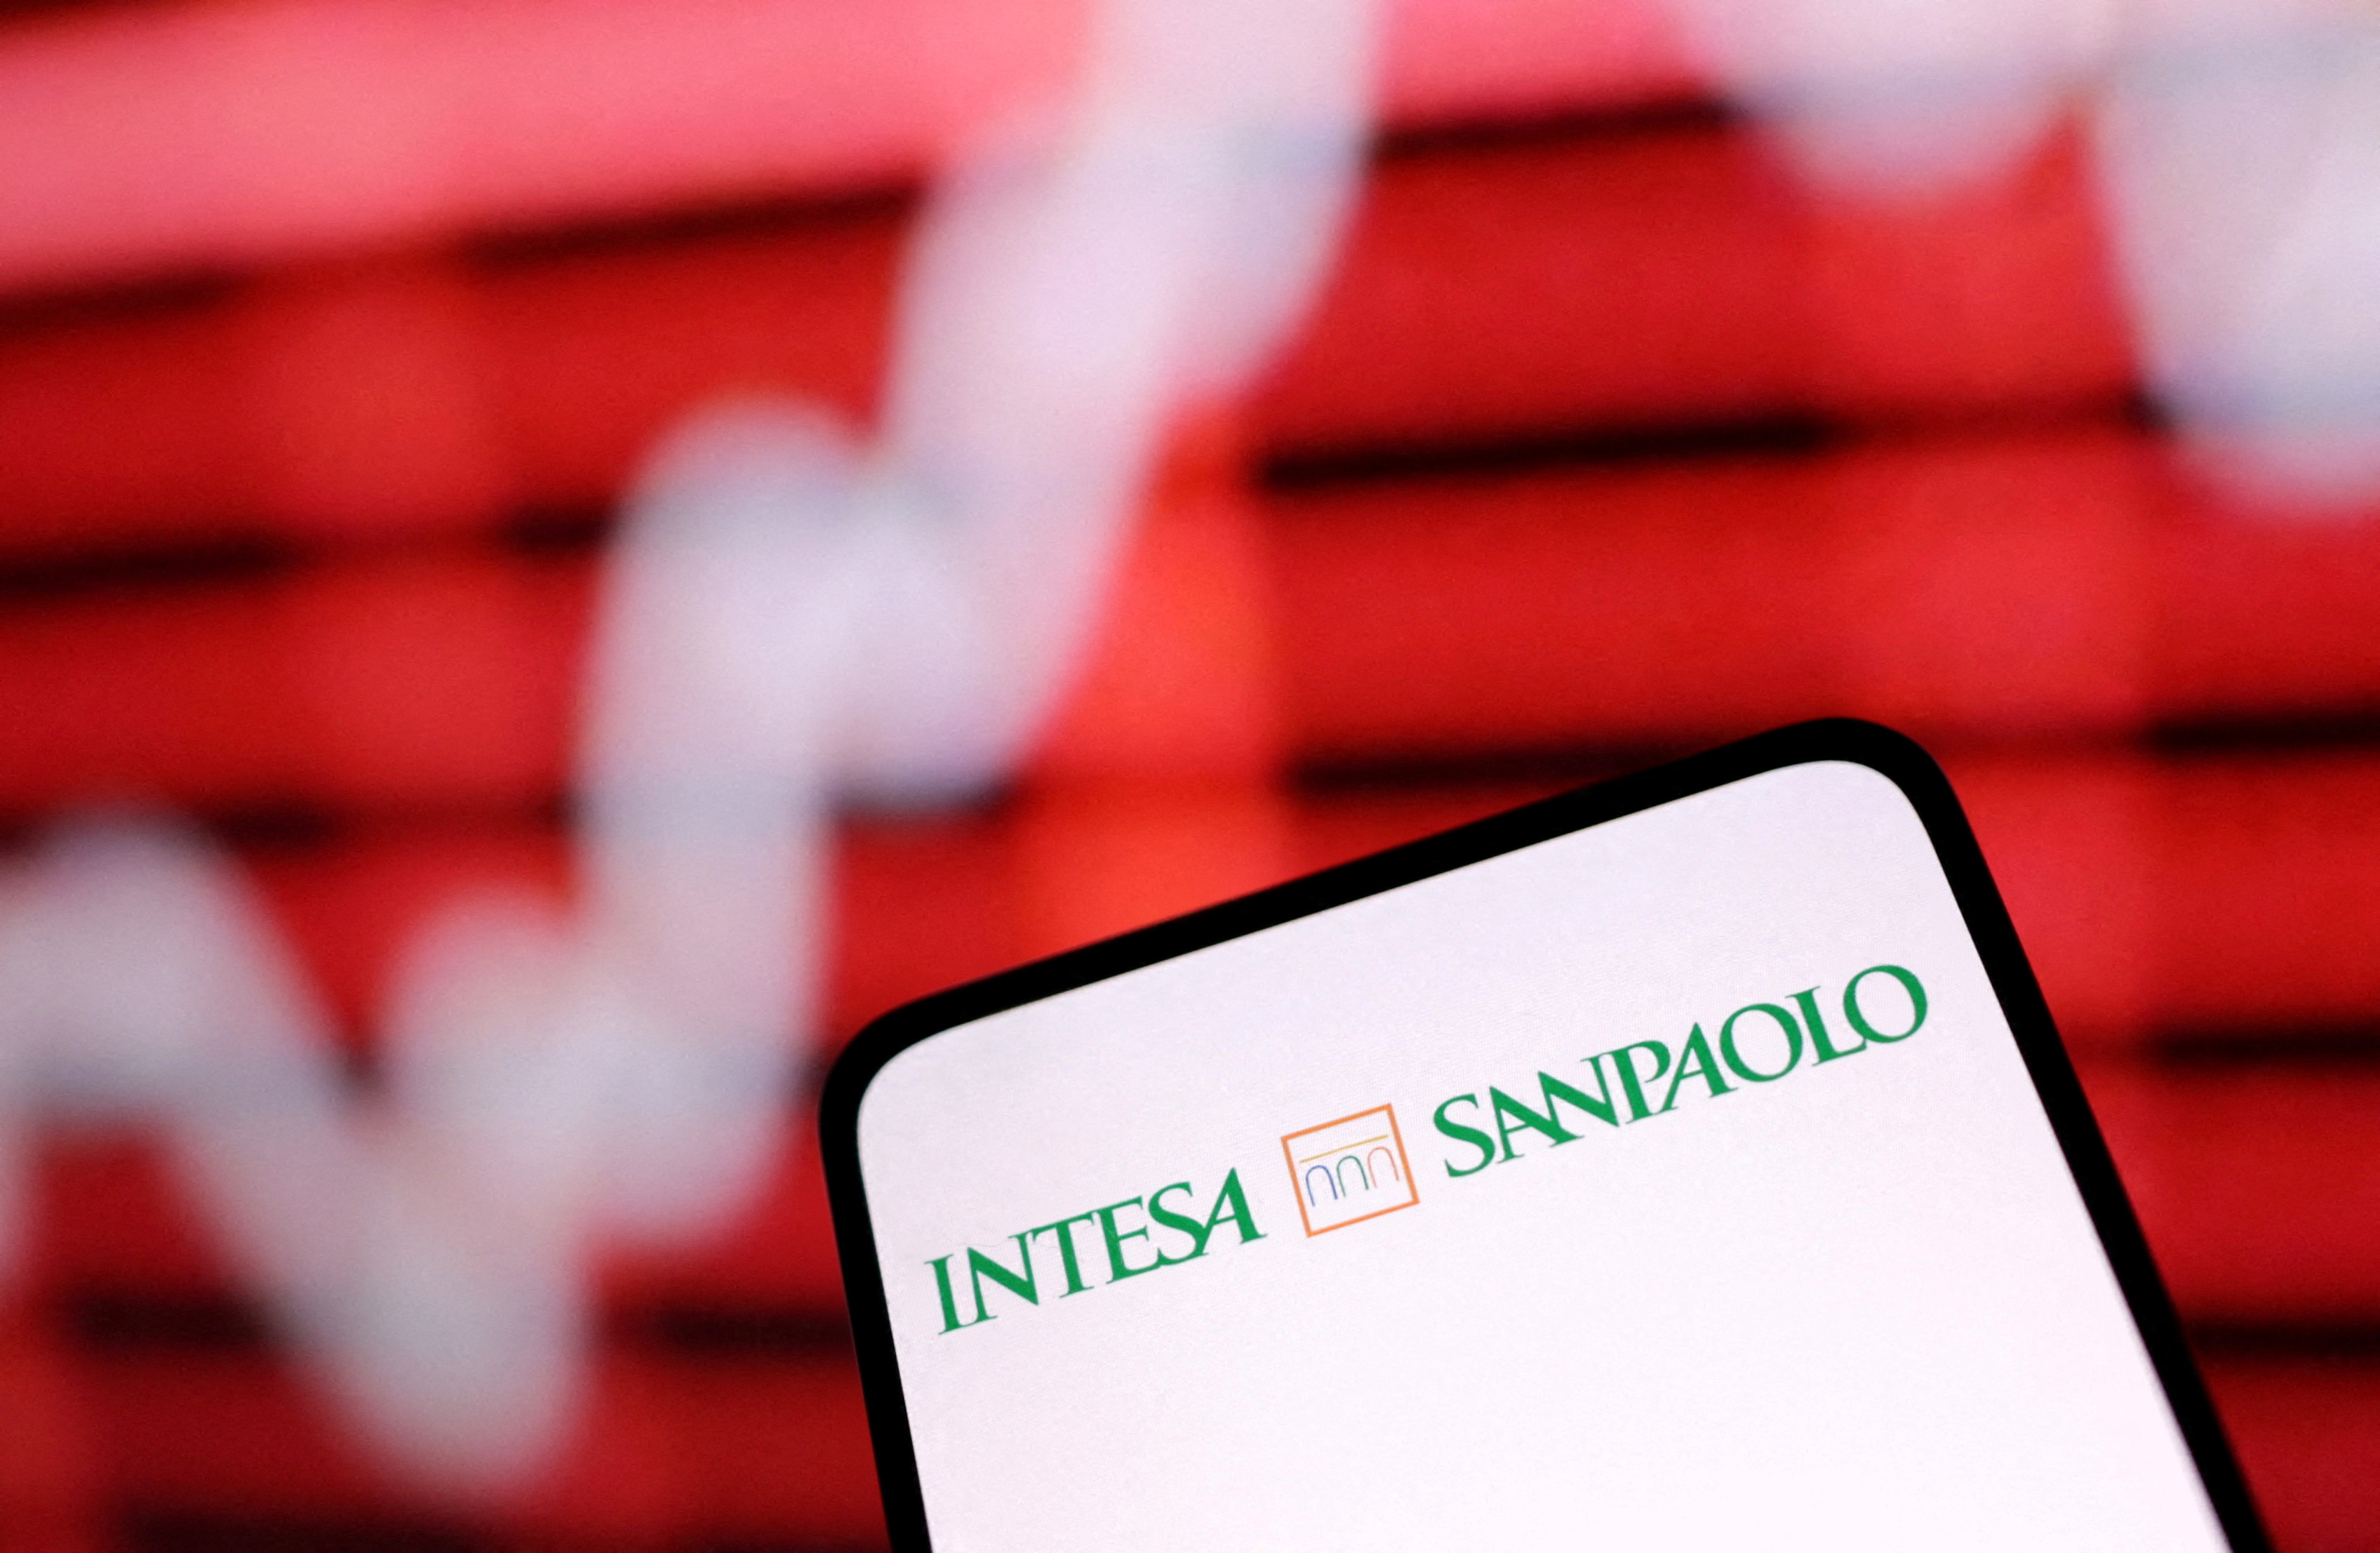 Illustration shows Intesa Sanpaolo bank logo and rising stock graph